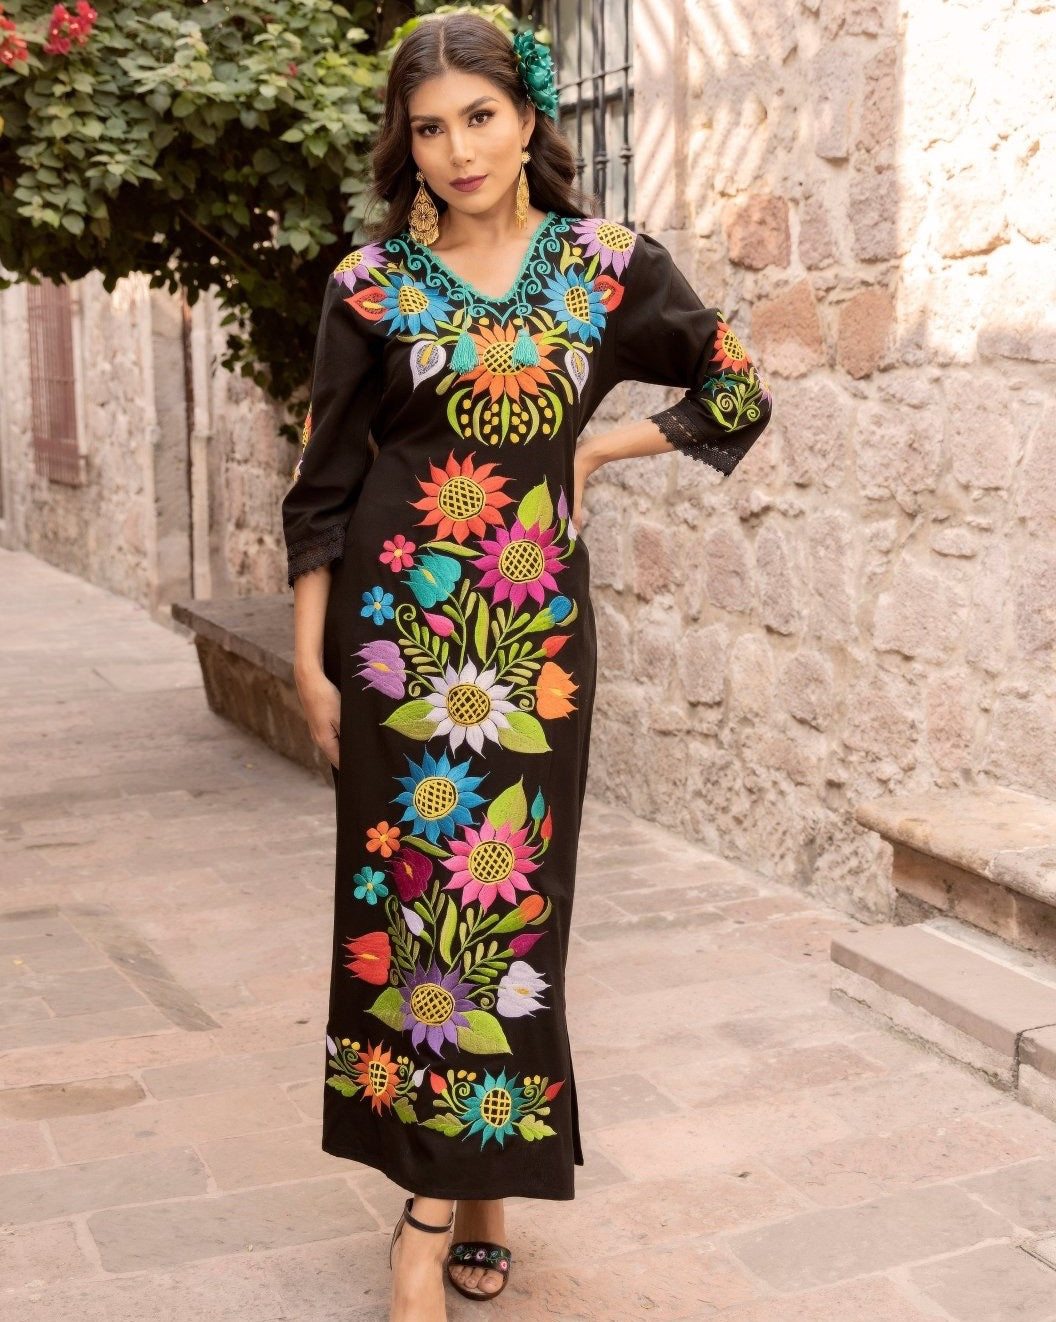 Multicolor Floral Mexican Dress. Black Dress-Multicolor Sunflower Design